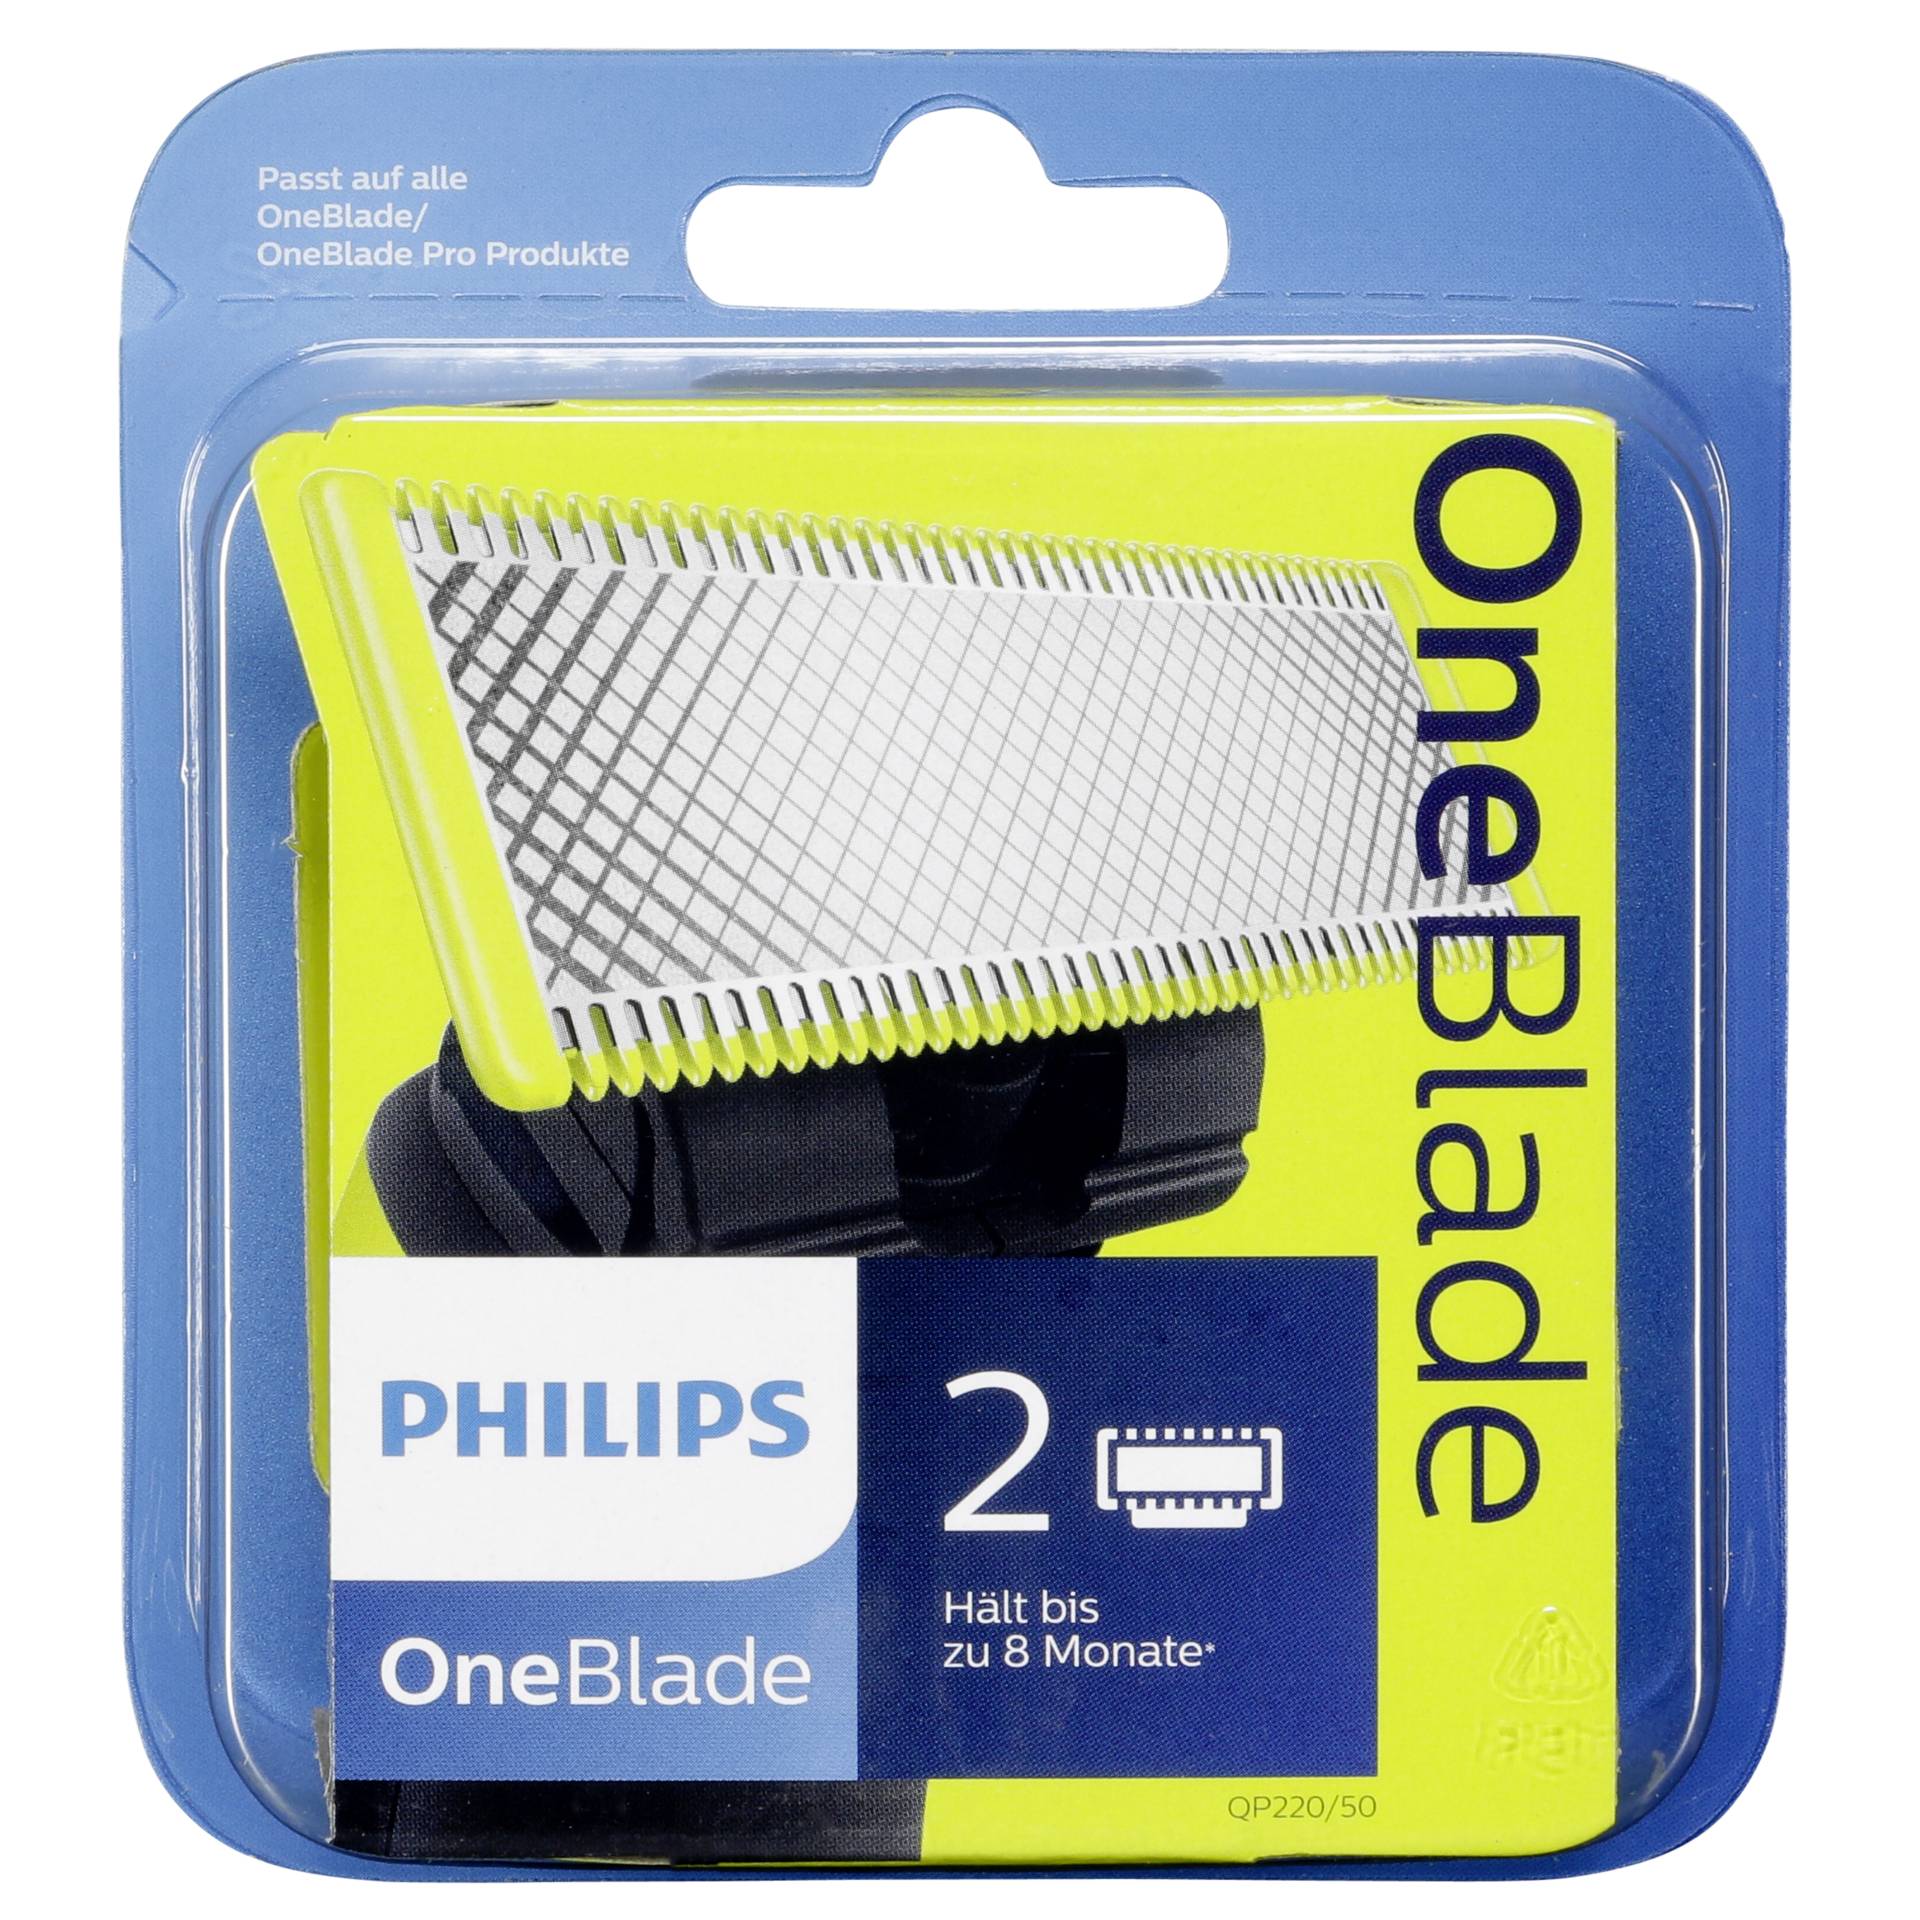 Philips Norelco OneBlade OneBlade QP220/50 Ersatzklinge